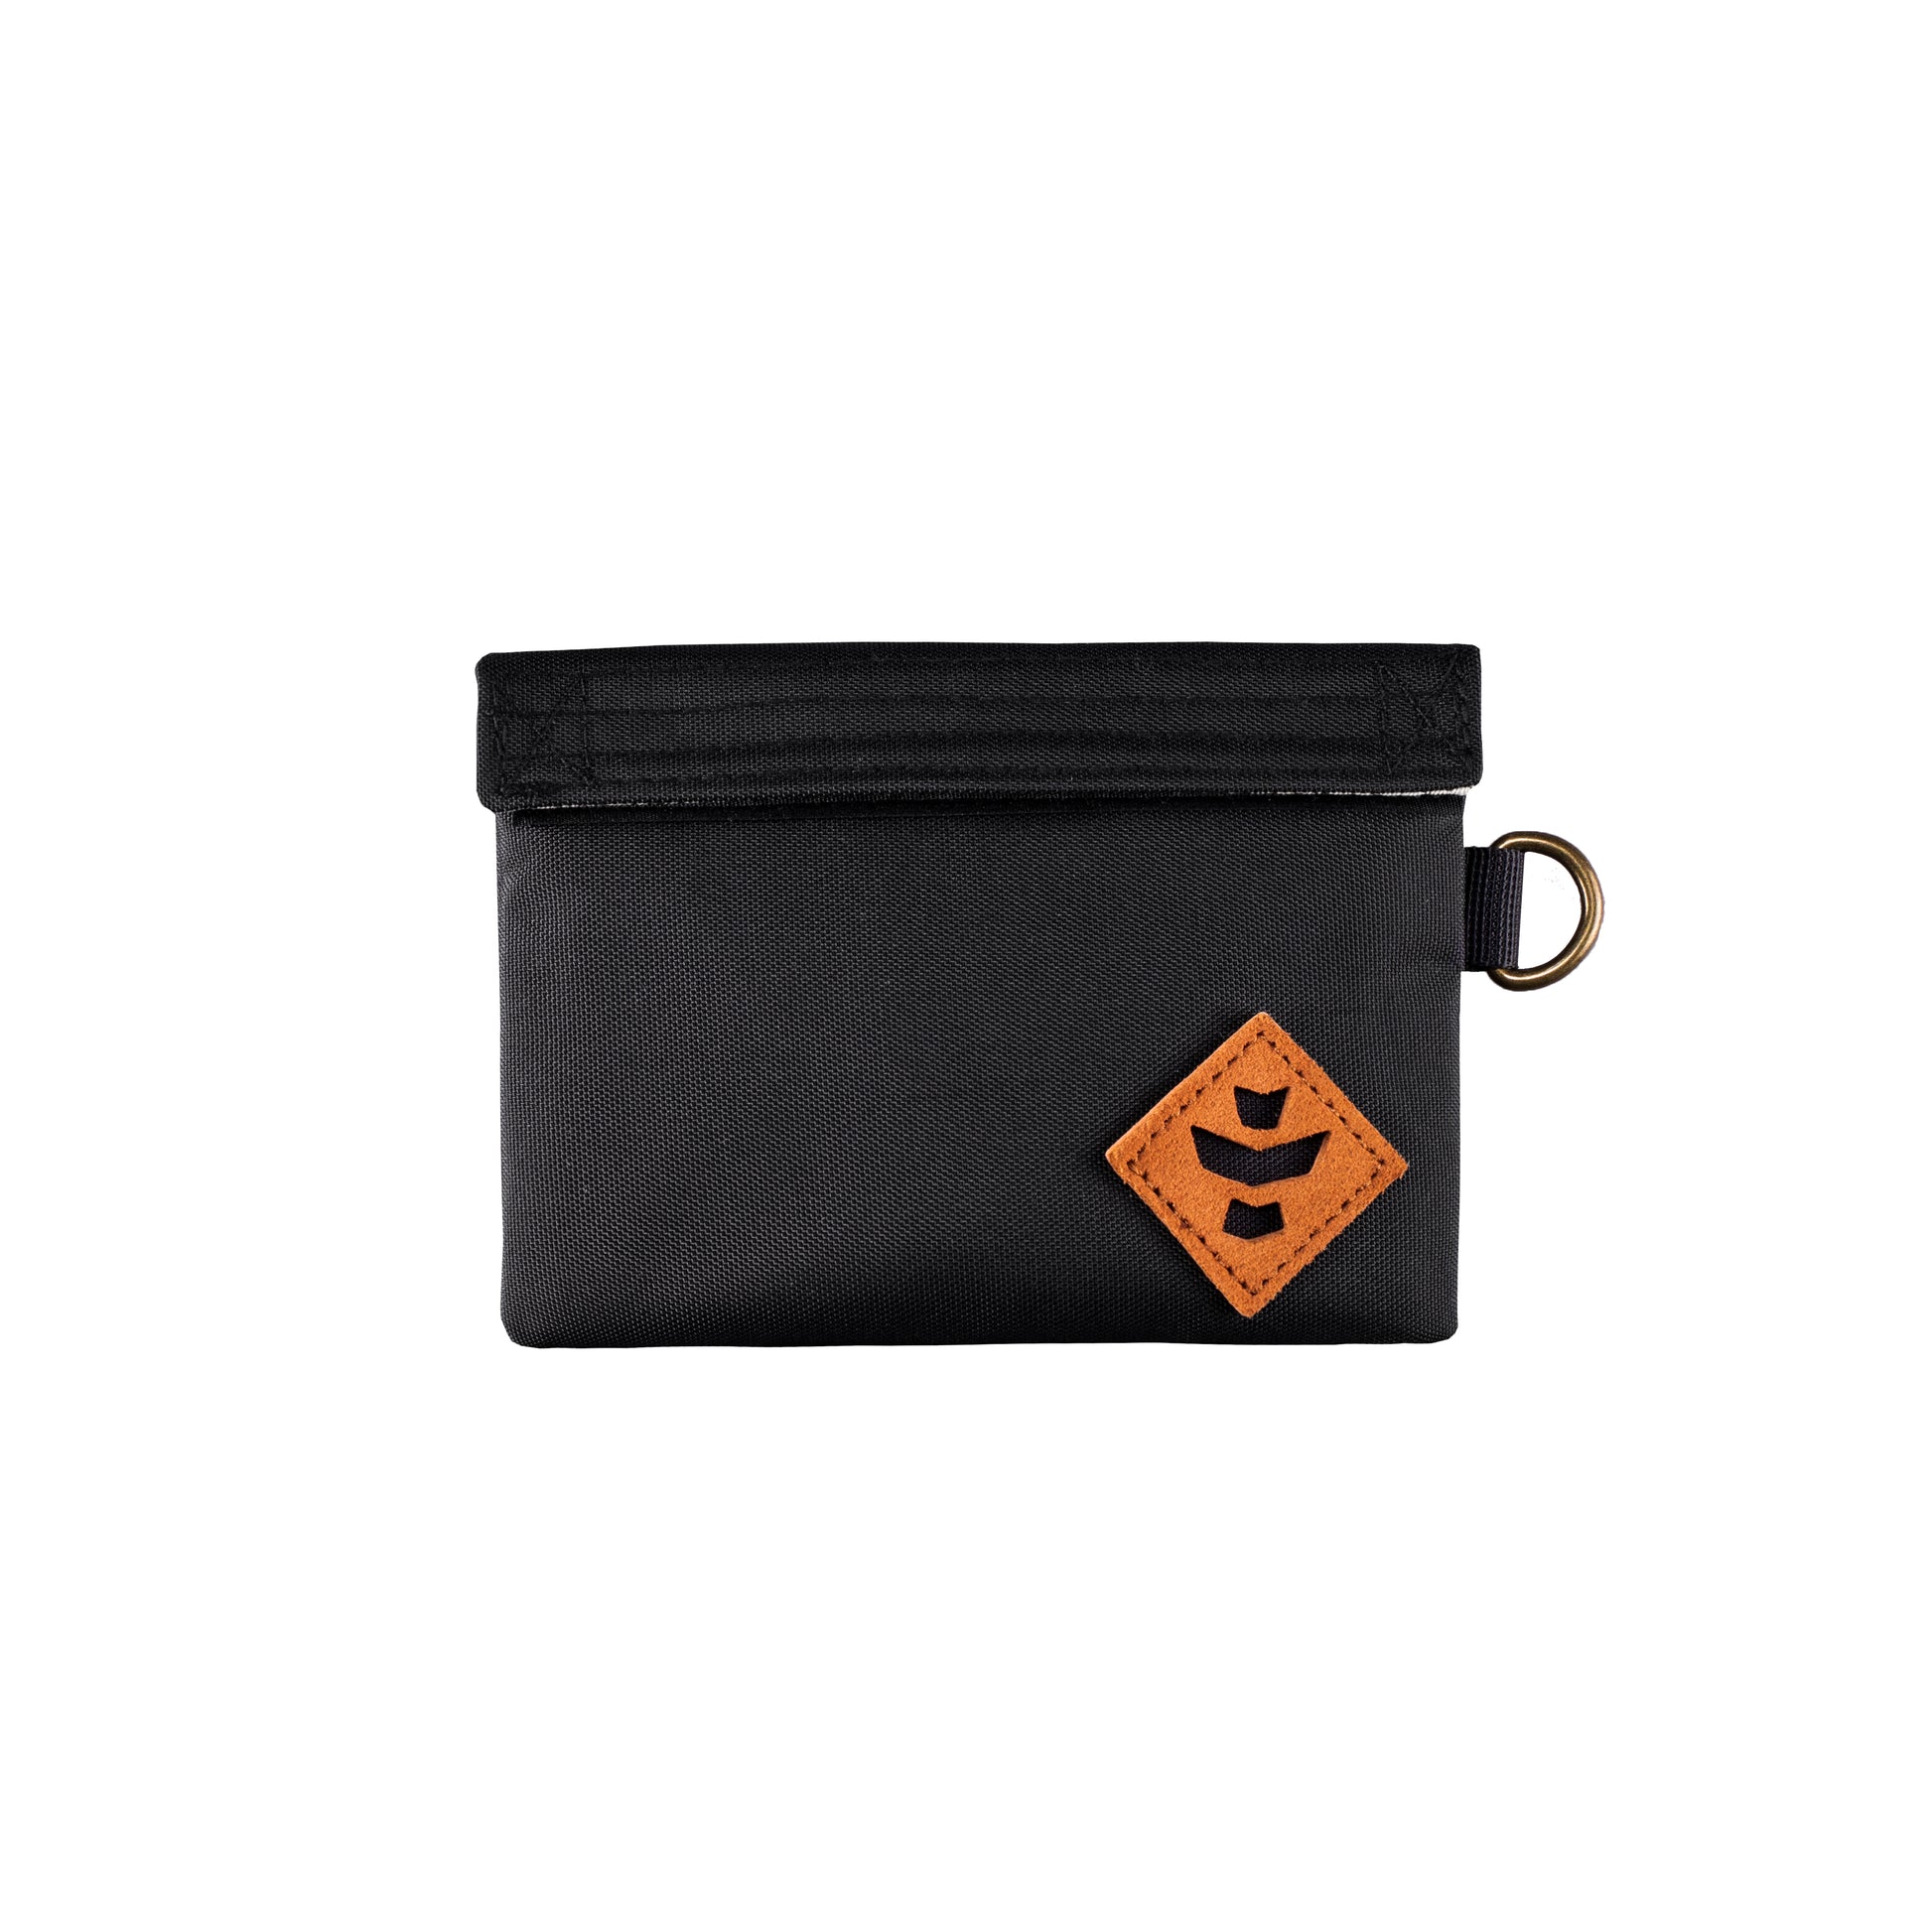 Revelry Mini Confidant Luggage and Travel Products : Travel Bag Revelry Supply Black  